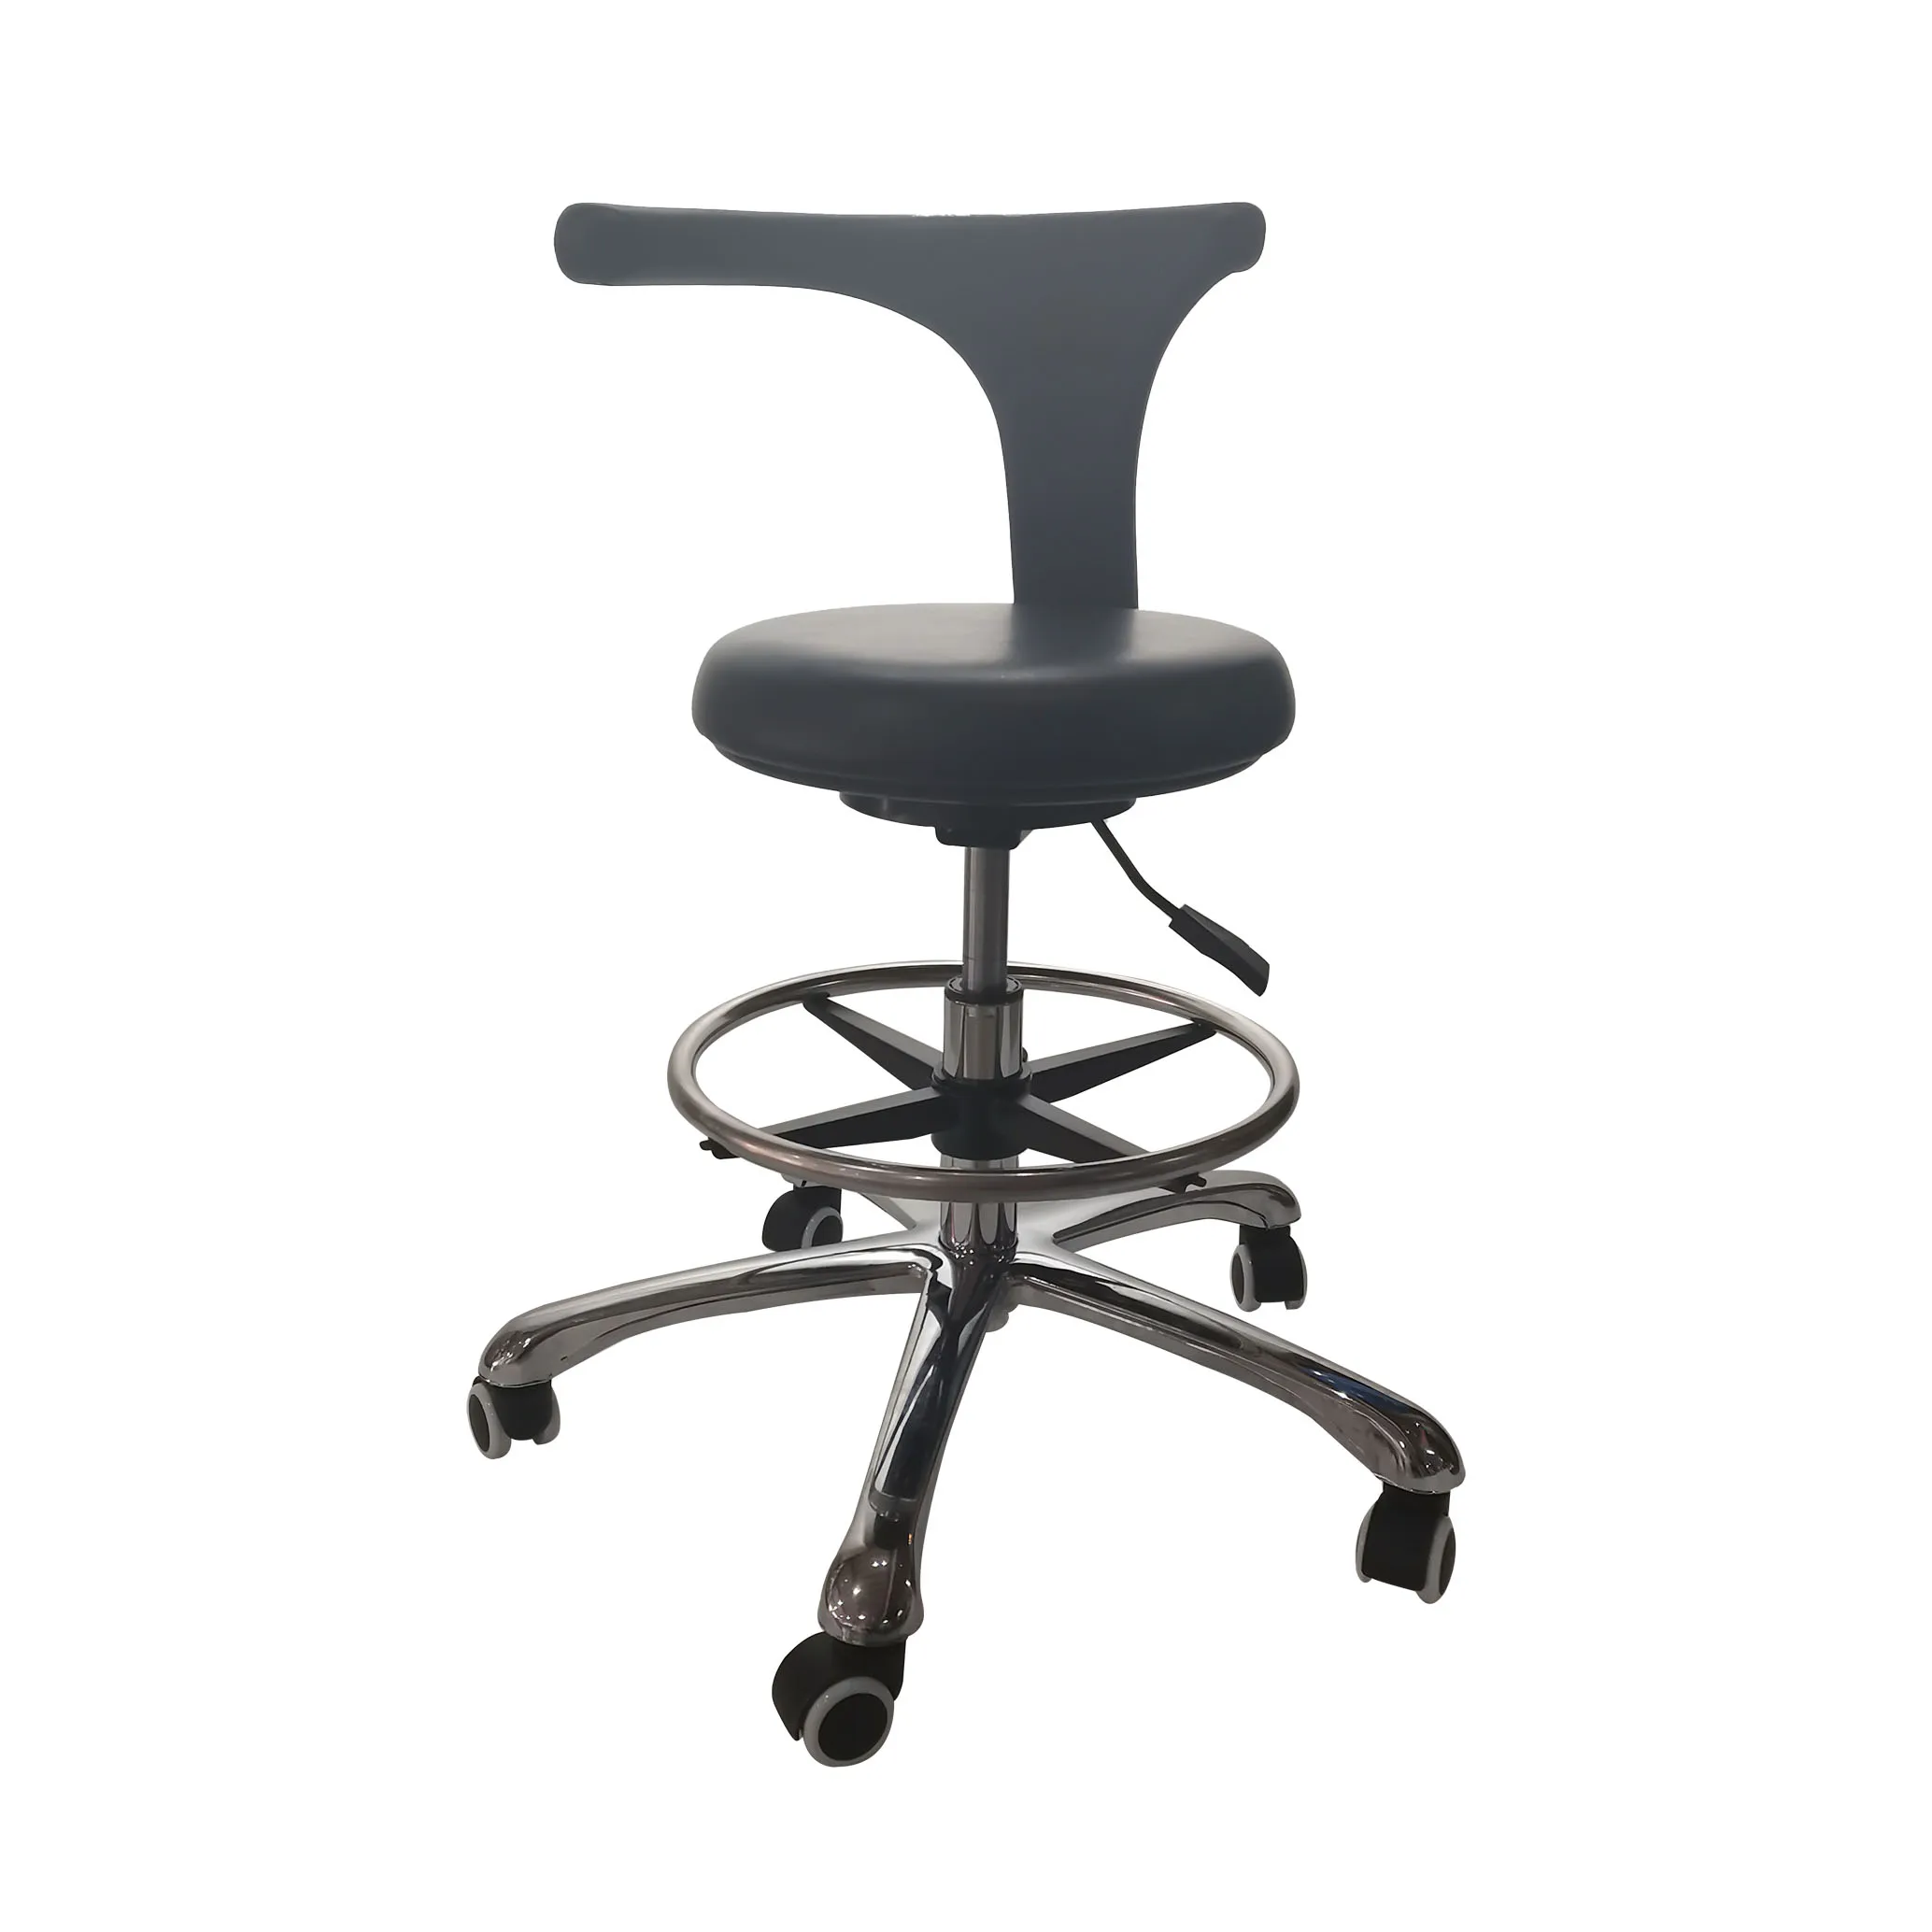 KEDE Wholesale adjust height workshop rolling swivel stool with wheels Foshan antistatic chair